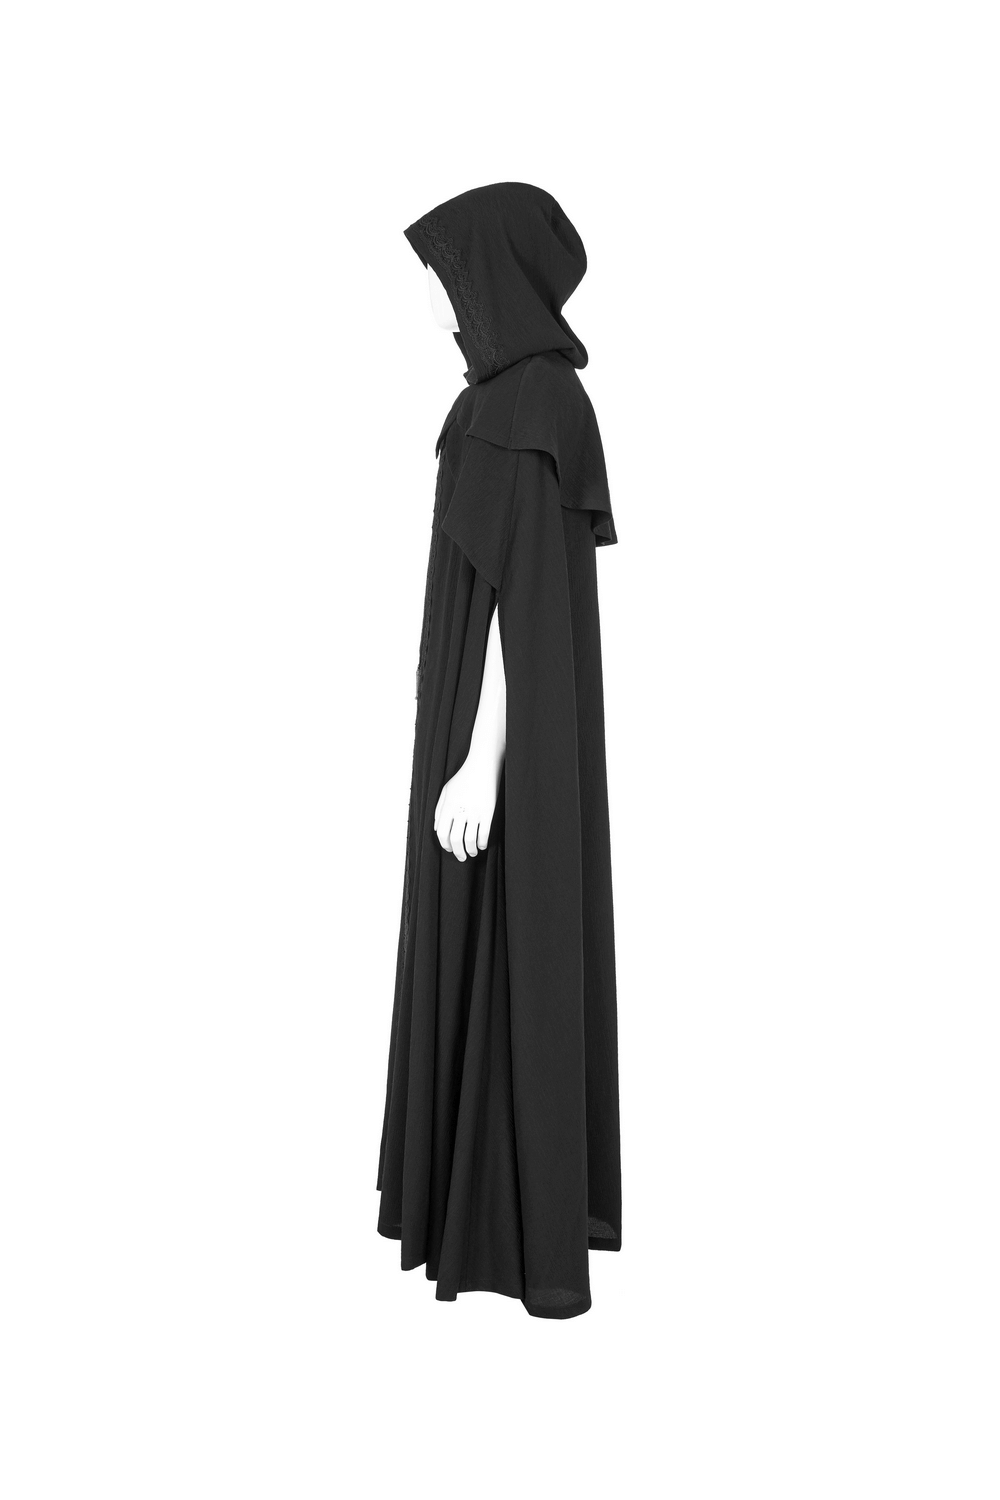 Elegant Rococo Simple Long Cloak with Cascading Shoulders - HARD'N'HEAVY